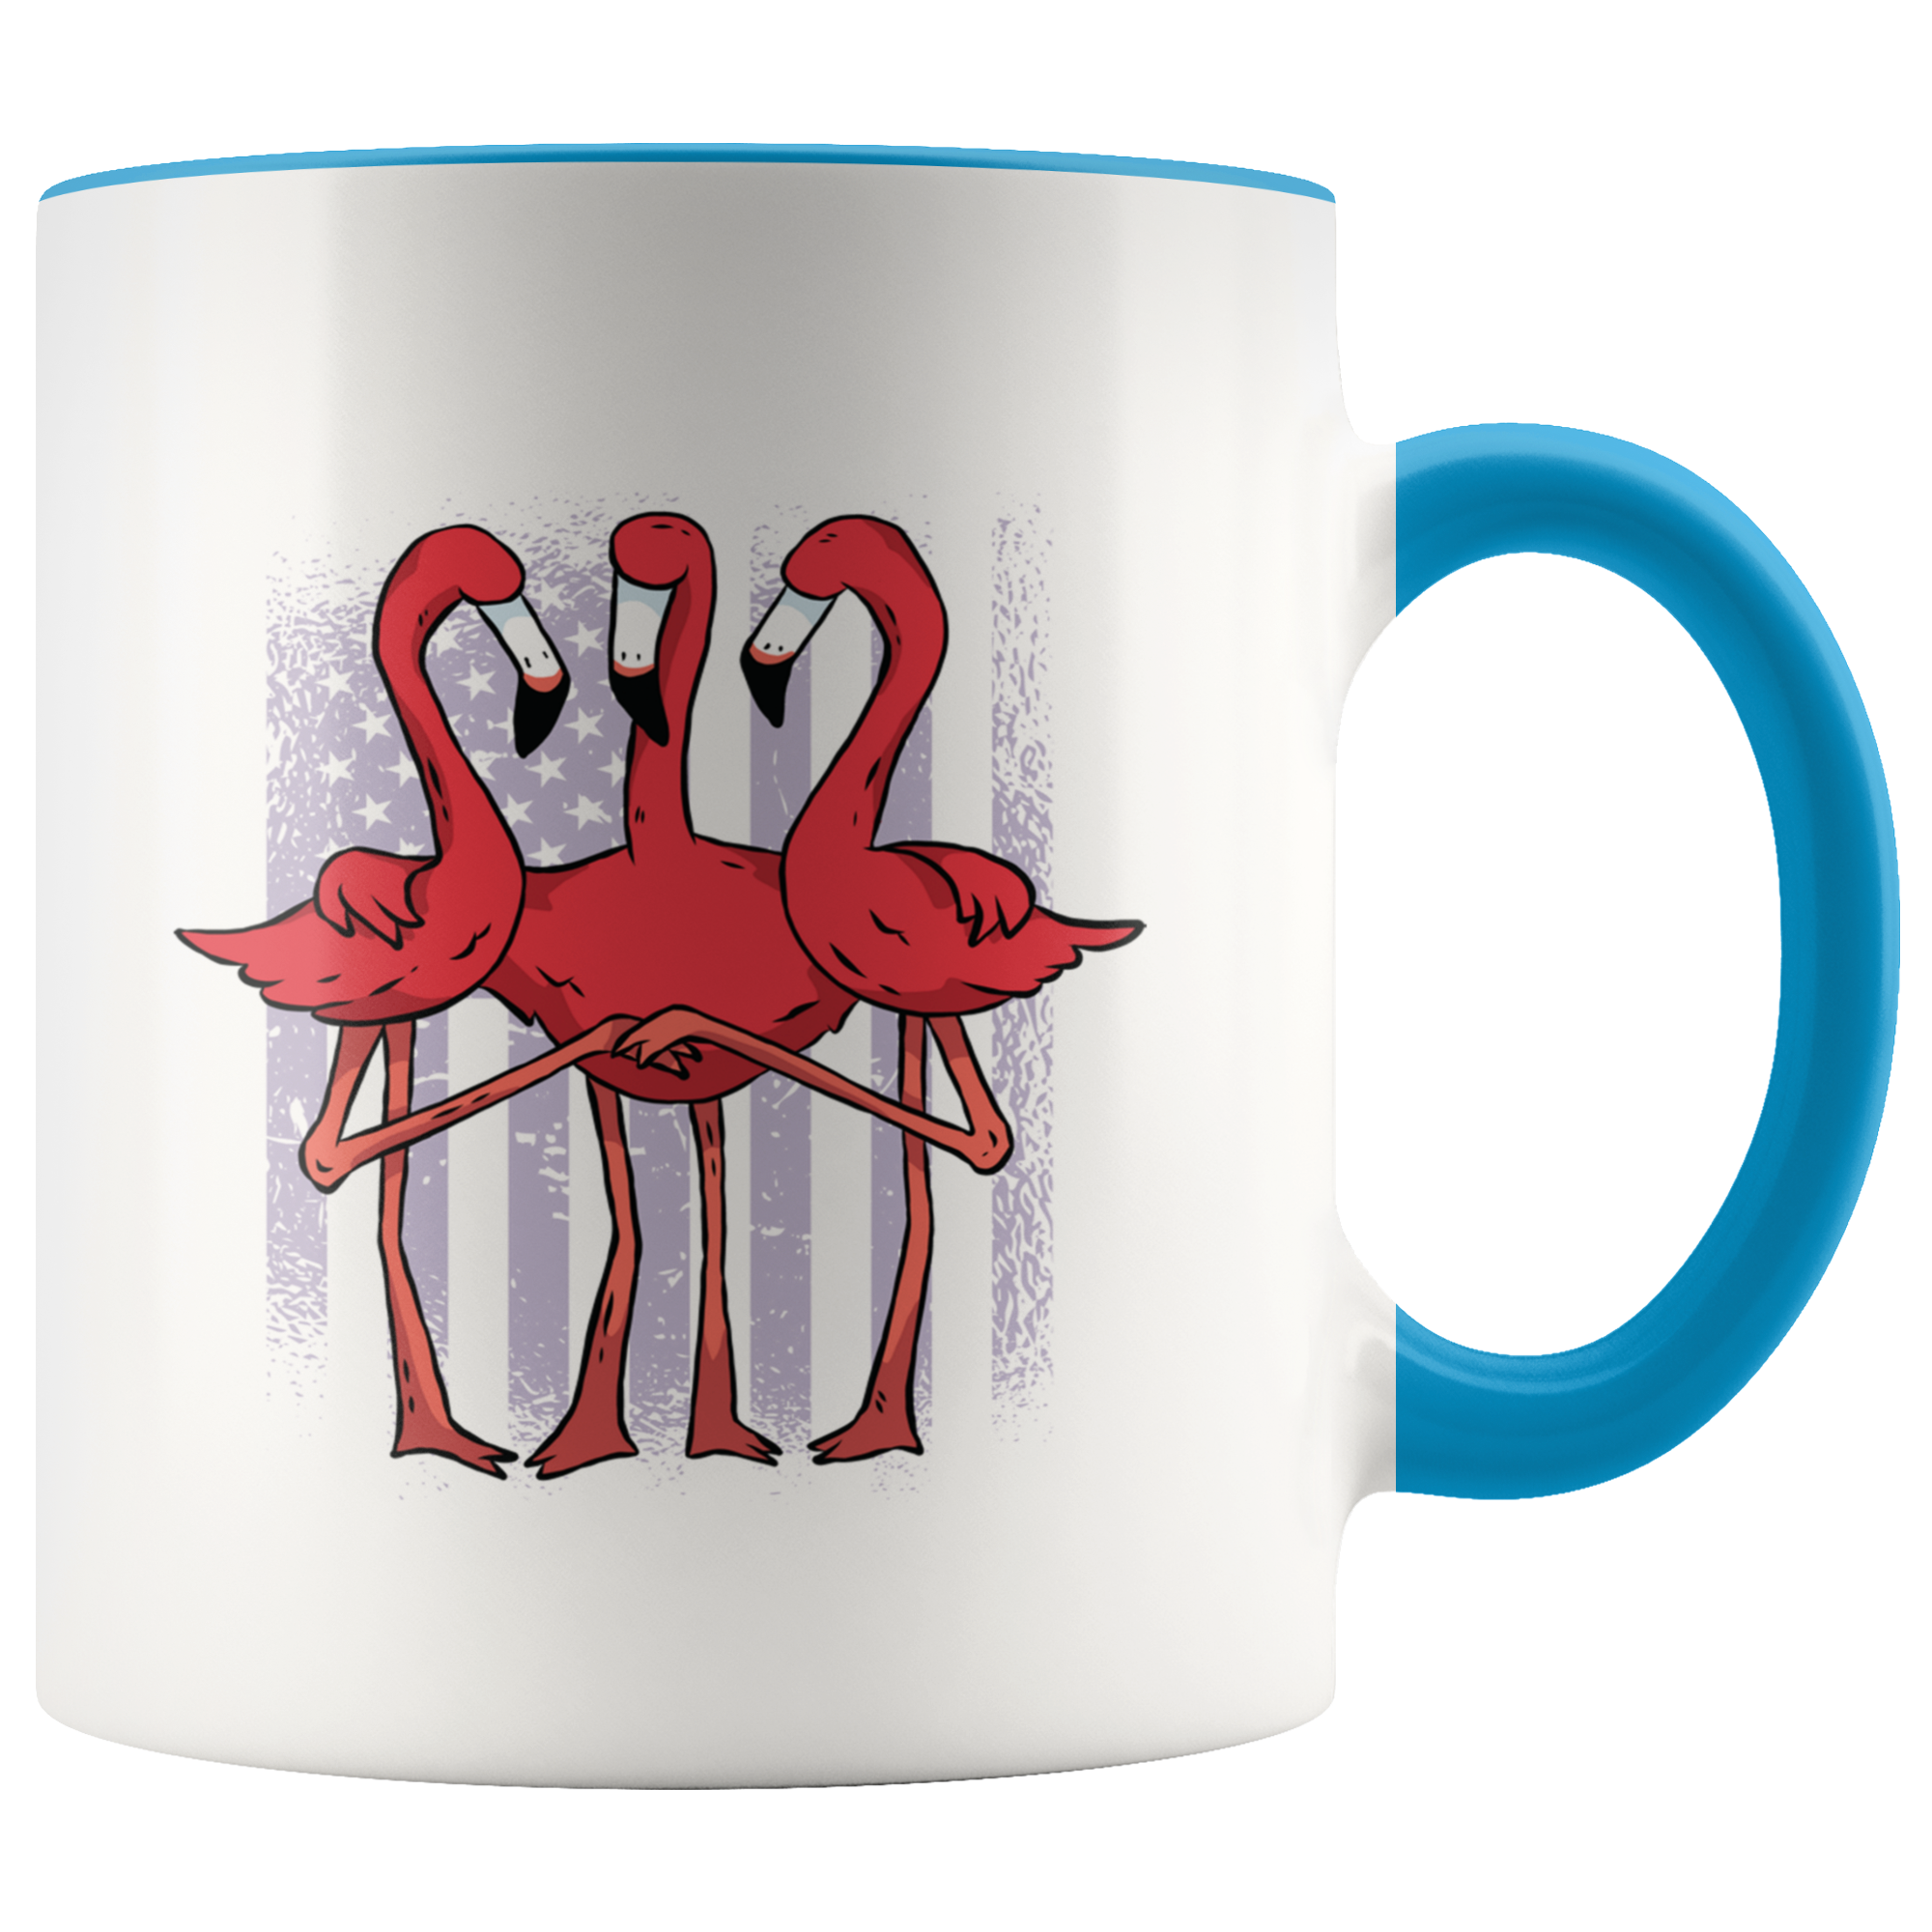 Three Flamingo Mug